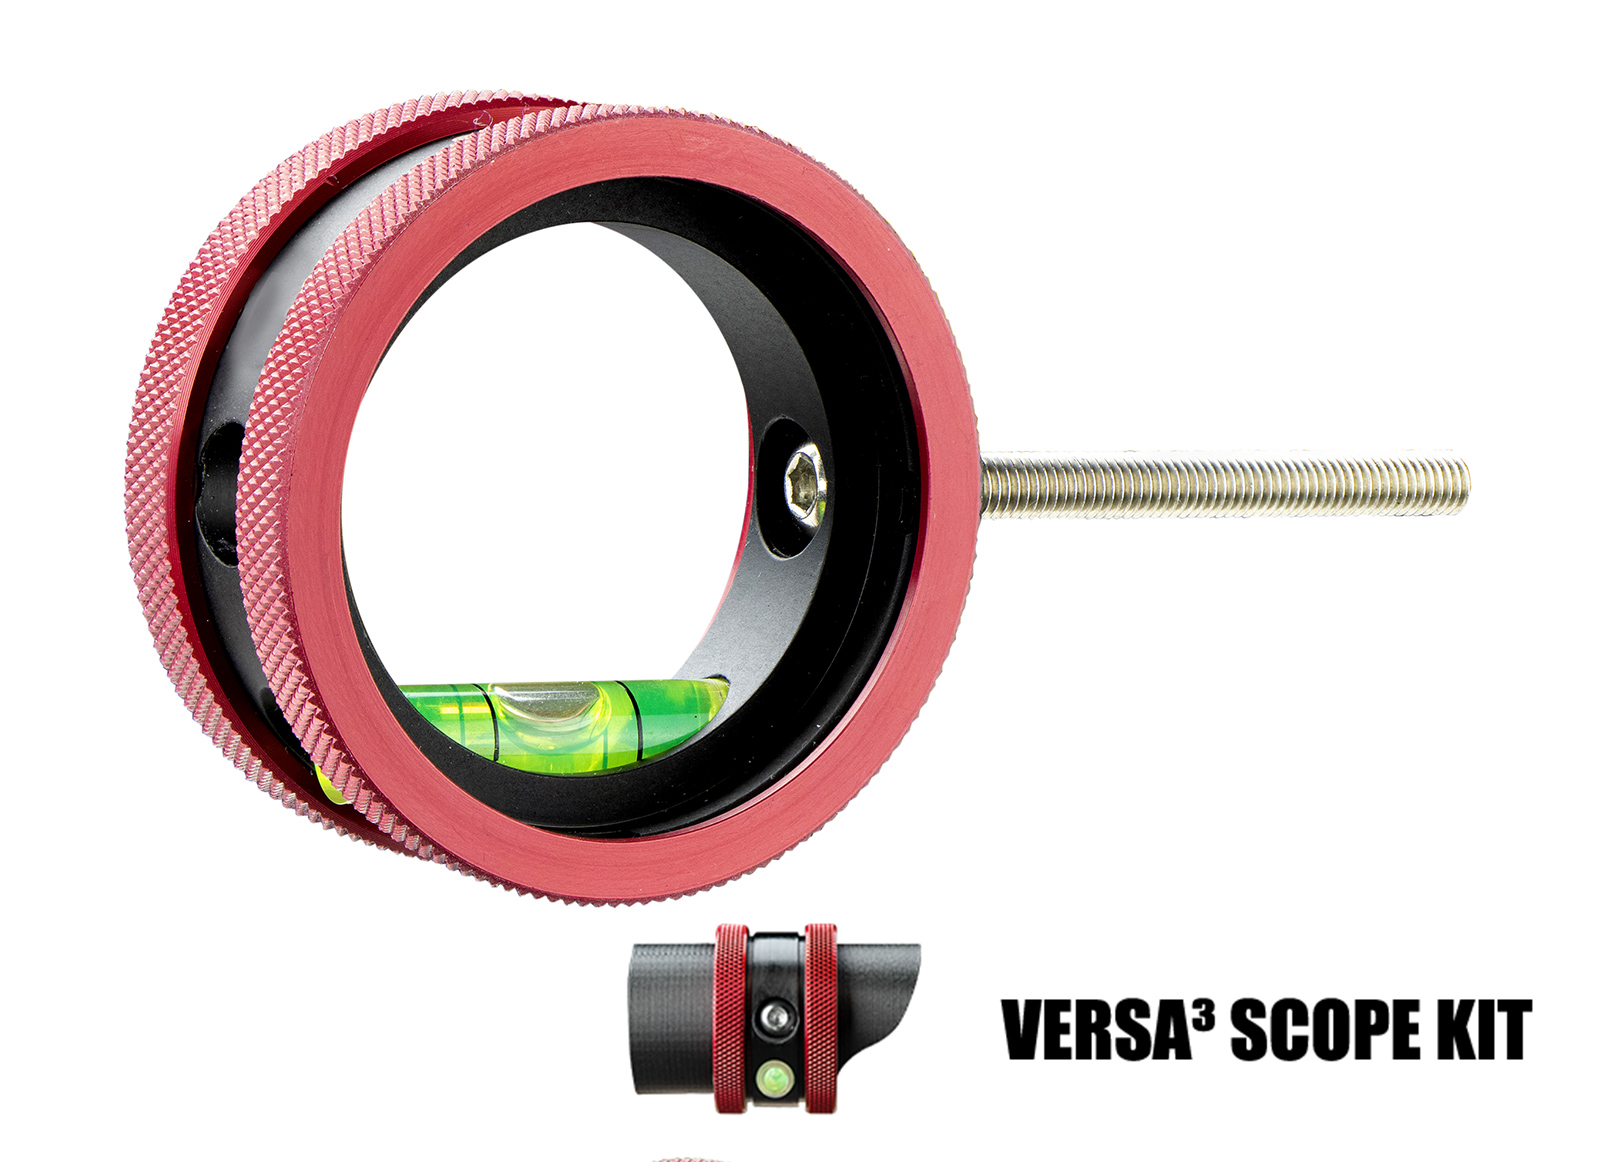 SPECIALTY SCOPE KIT VERSA3 FULL OPTIONAL XL